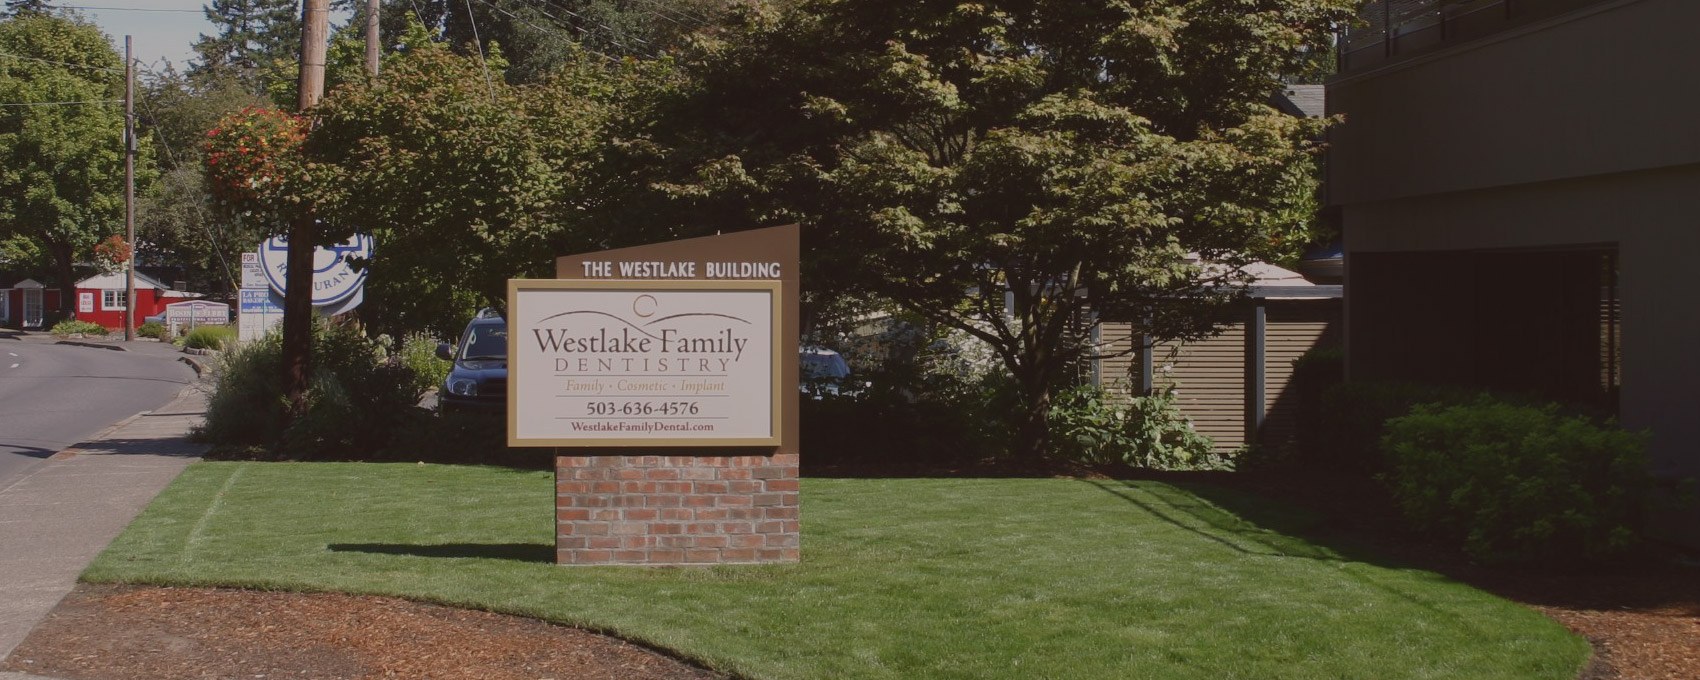 Visit us - Westlake Family Dentistry